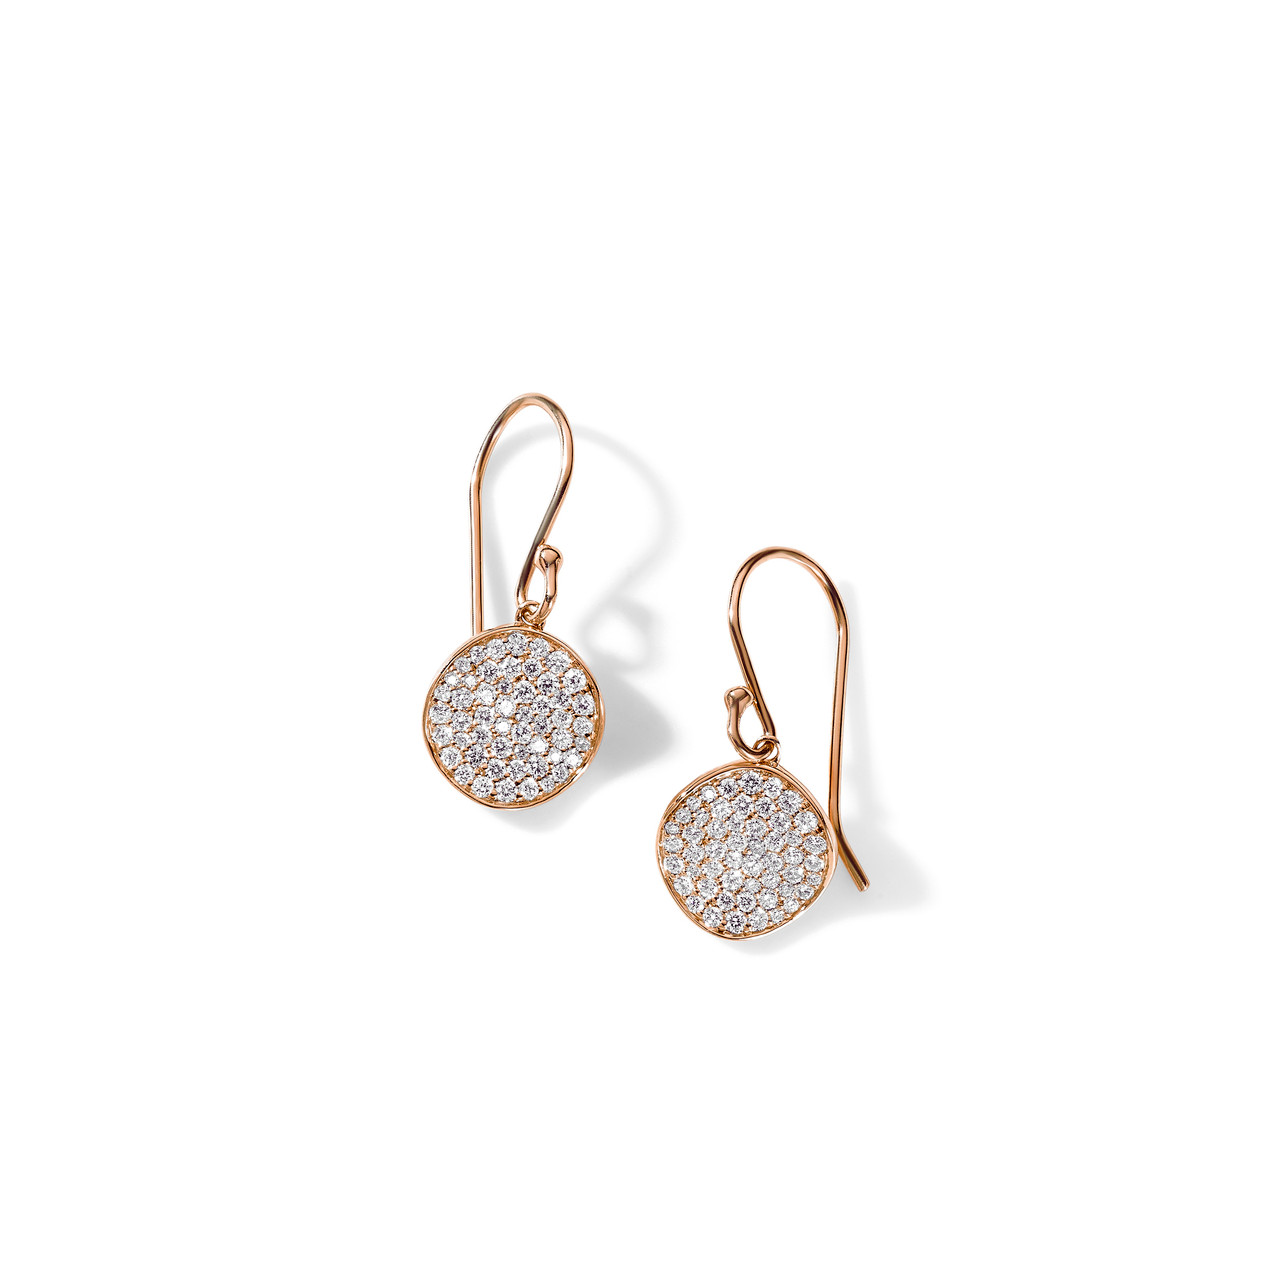 Butani Official Website - Exceptional Diamond Jewellery & Gold Jewellery.